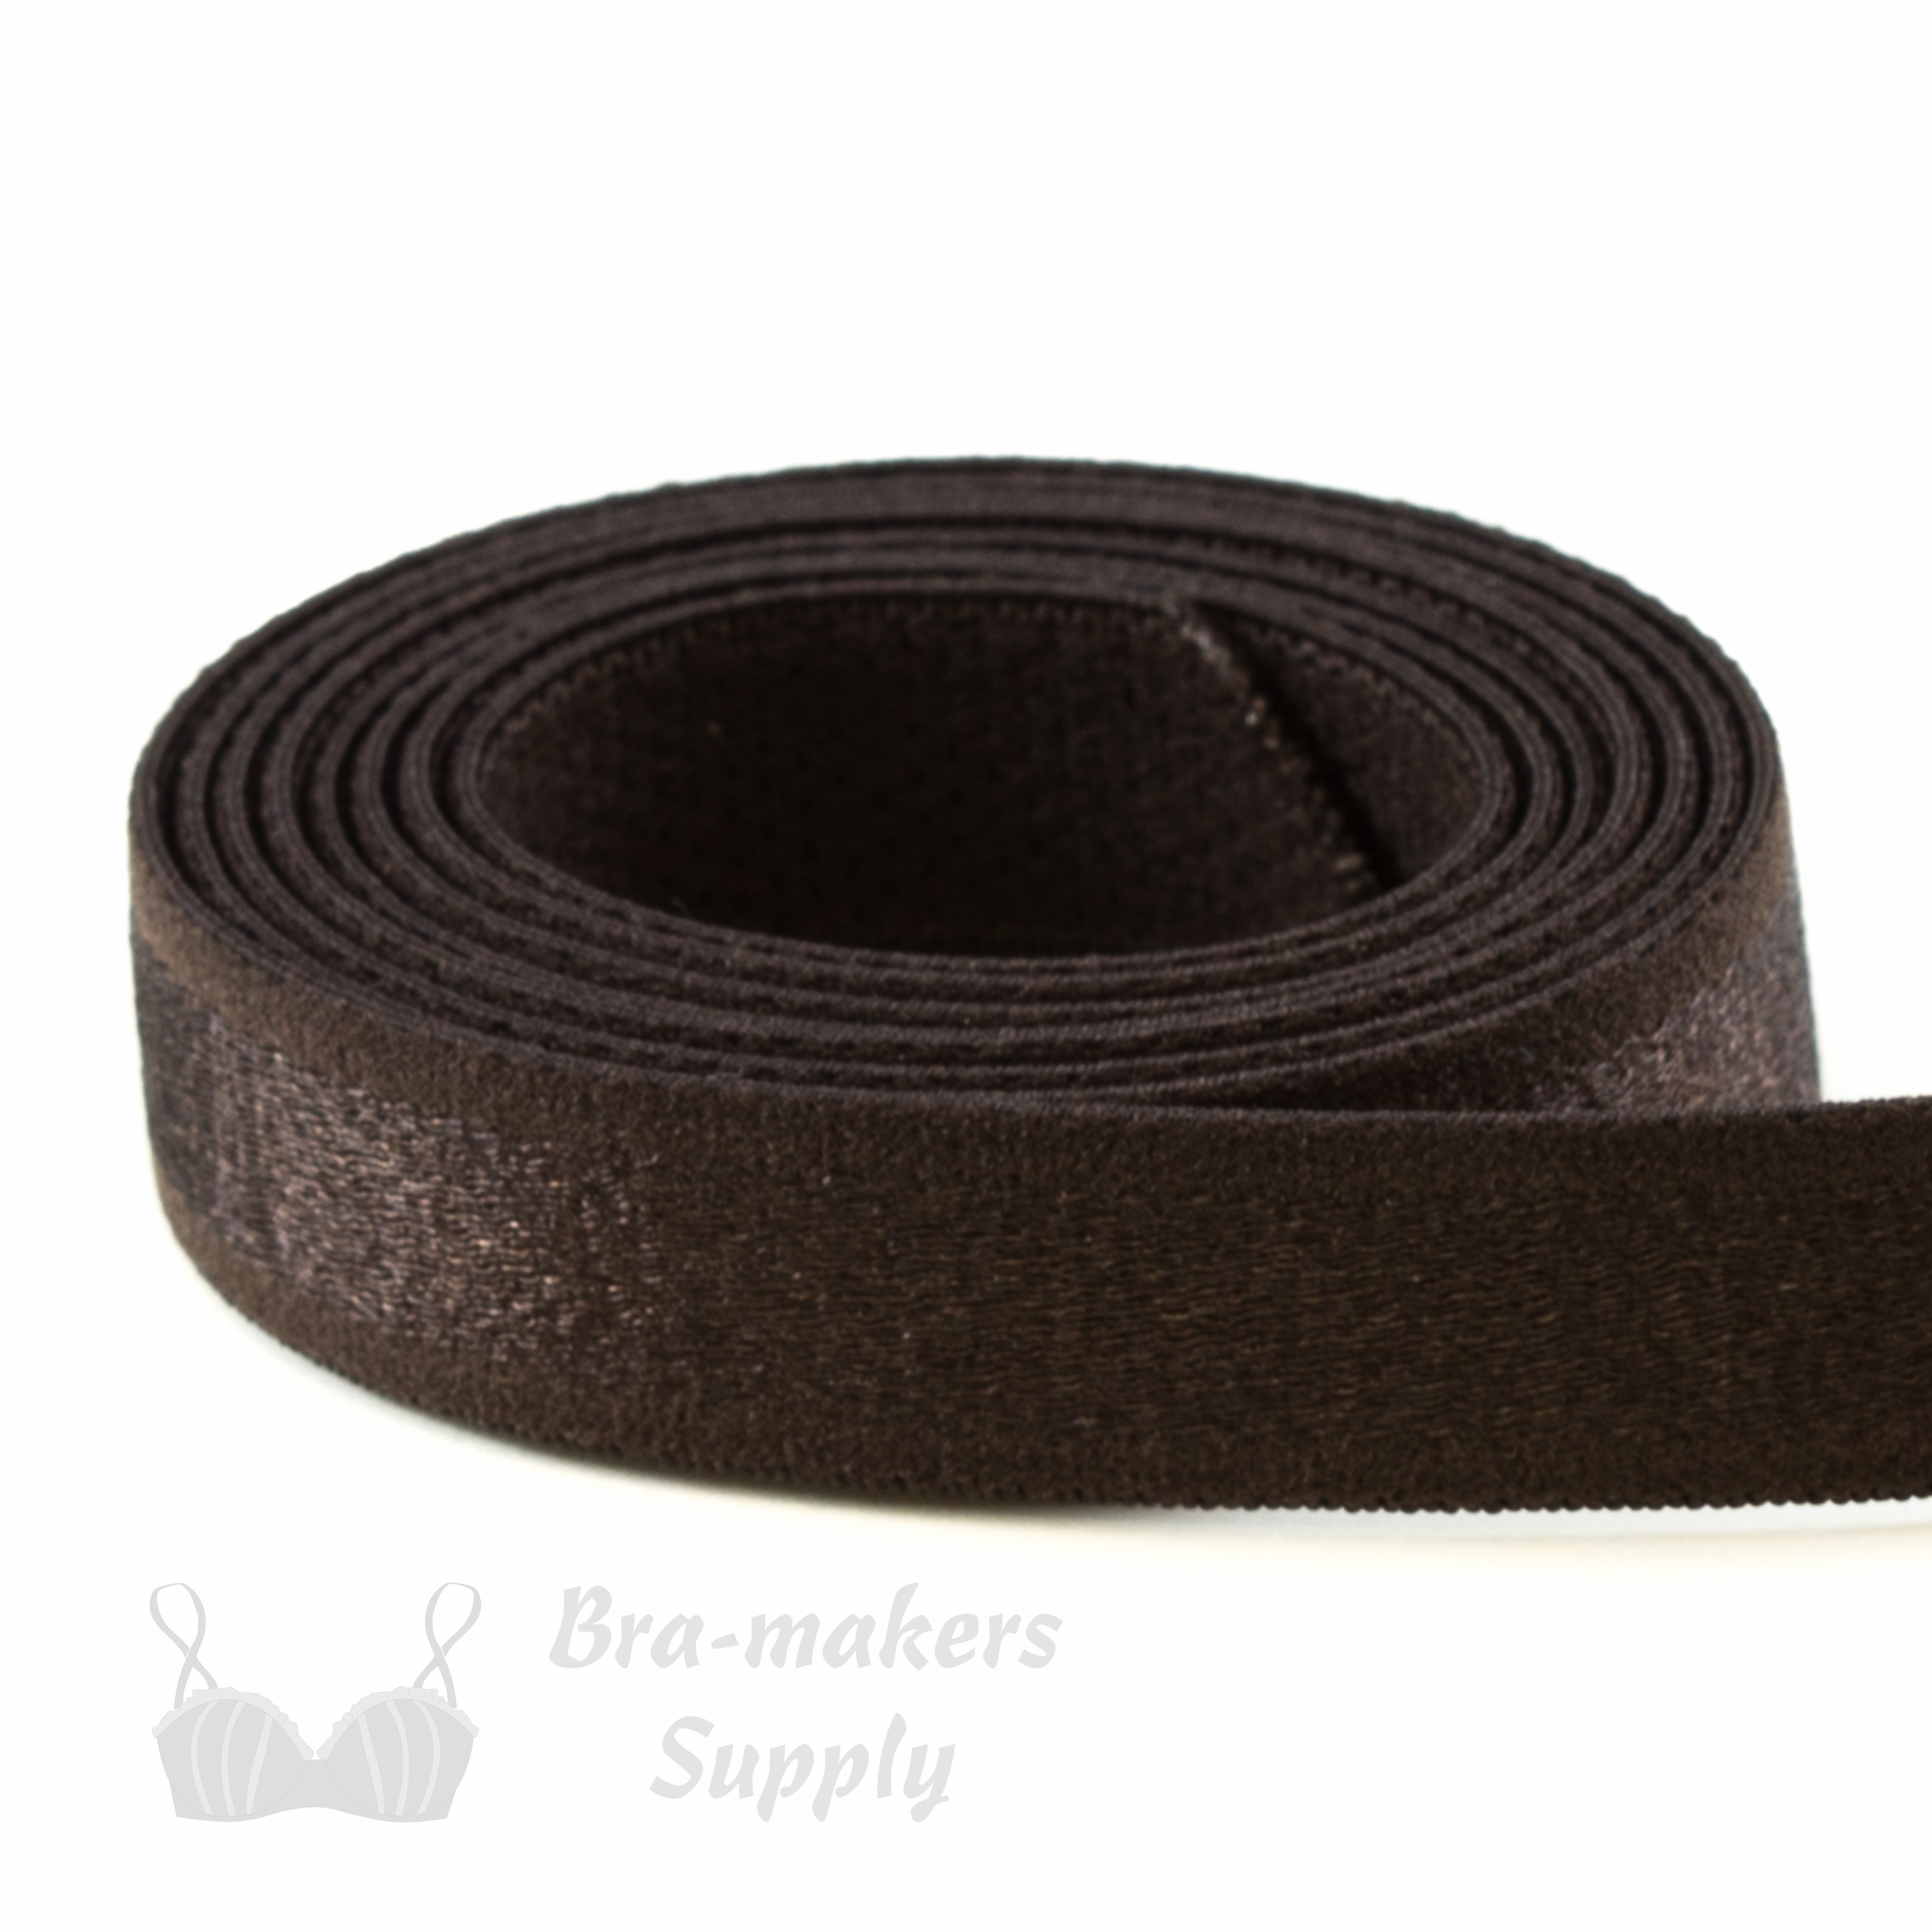 half inch satin stripe strap elastic or 12 mm bra strap elastic ES-44 chocolate from Bra-Makers Supply 1 metre roll shown